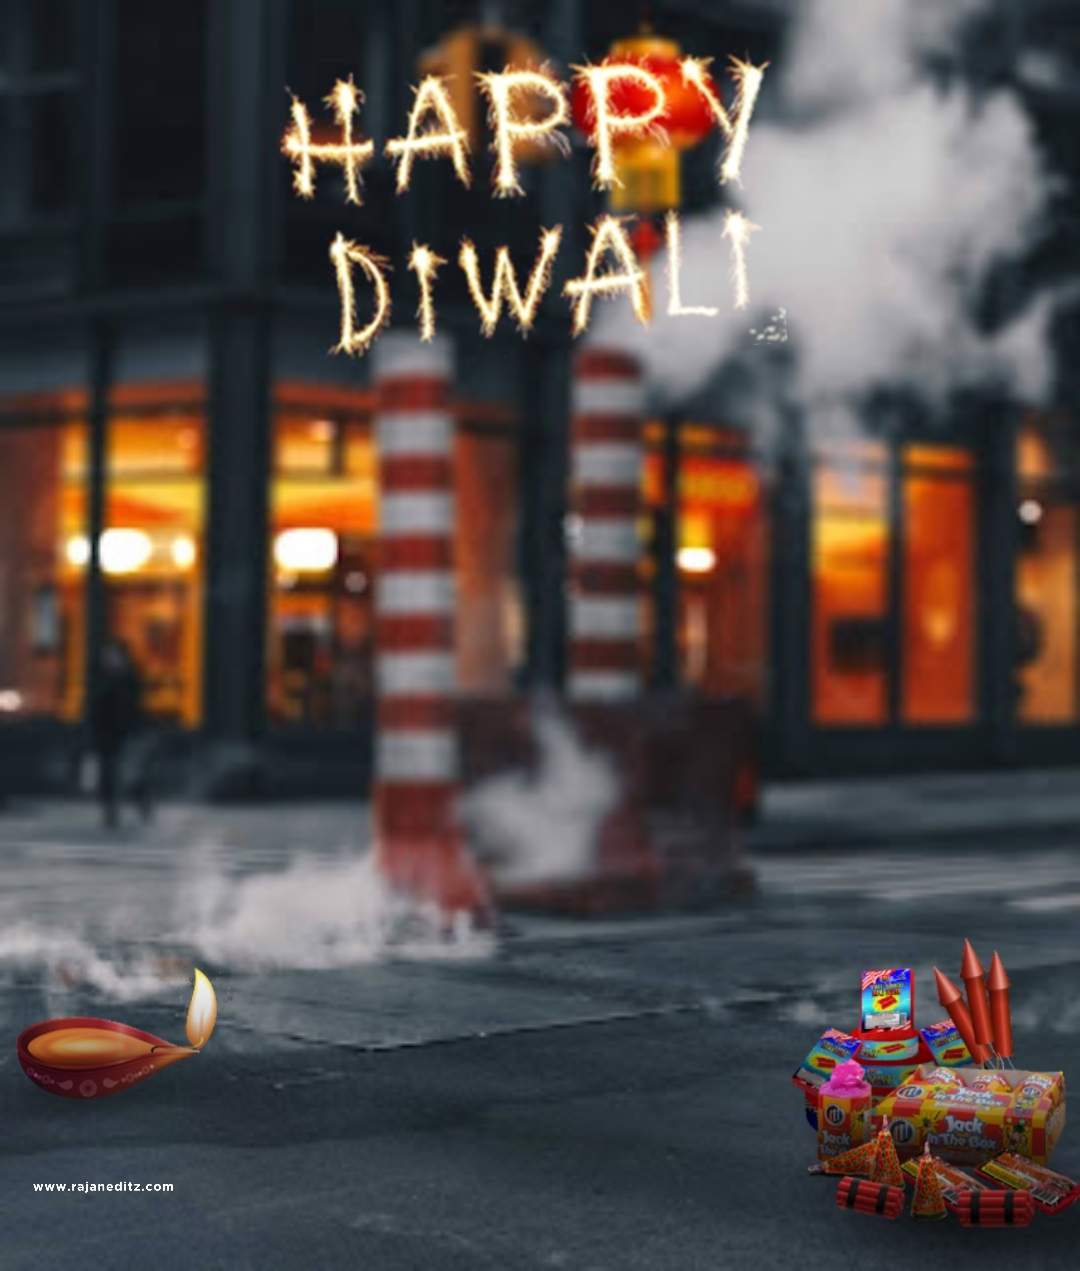 happy diwali fire editing background_Diwali editing background_Rajan editz